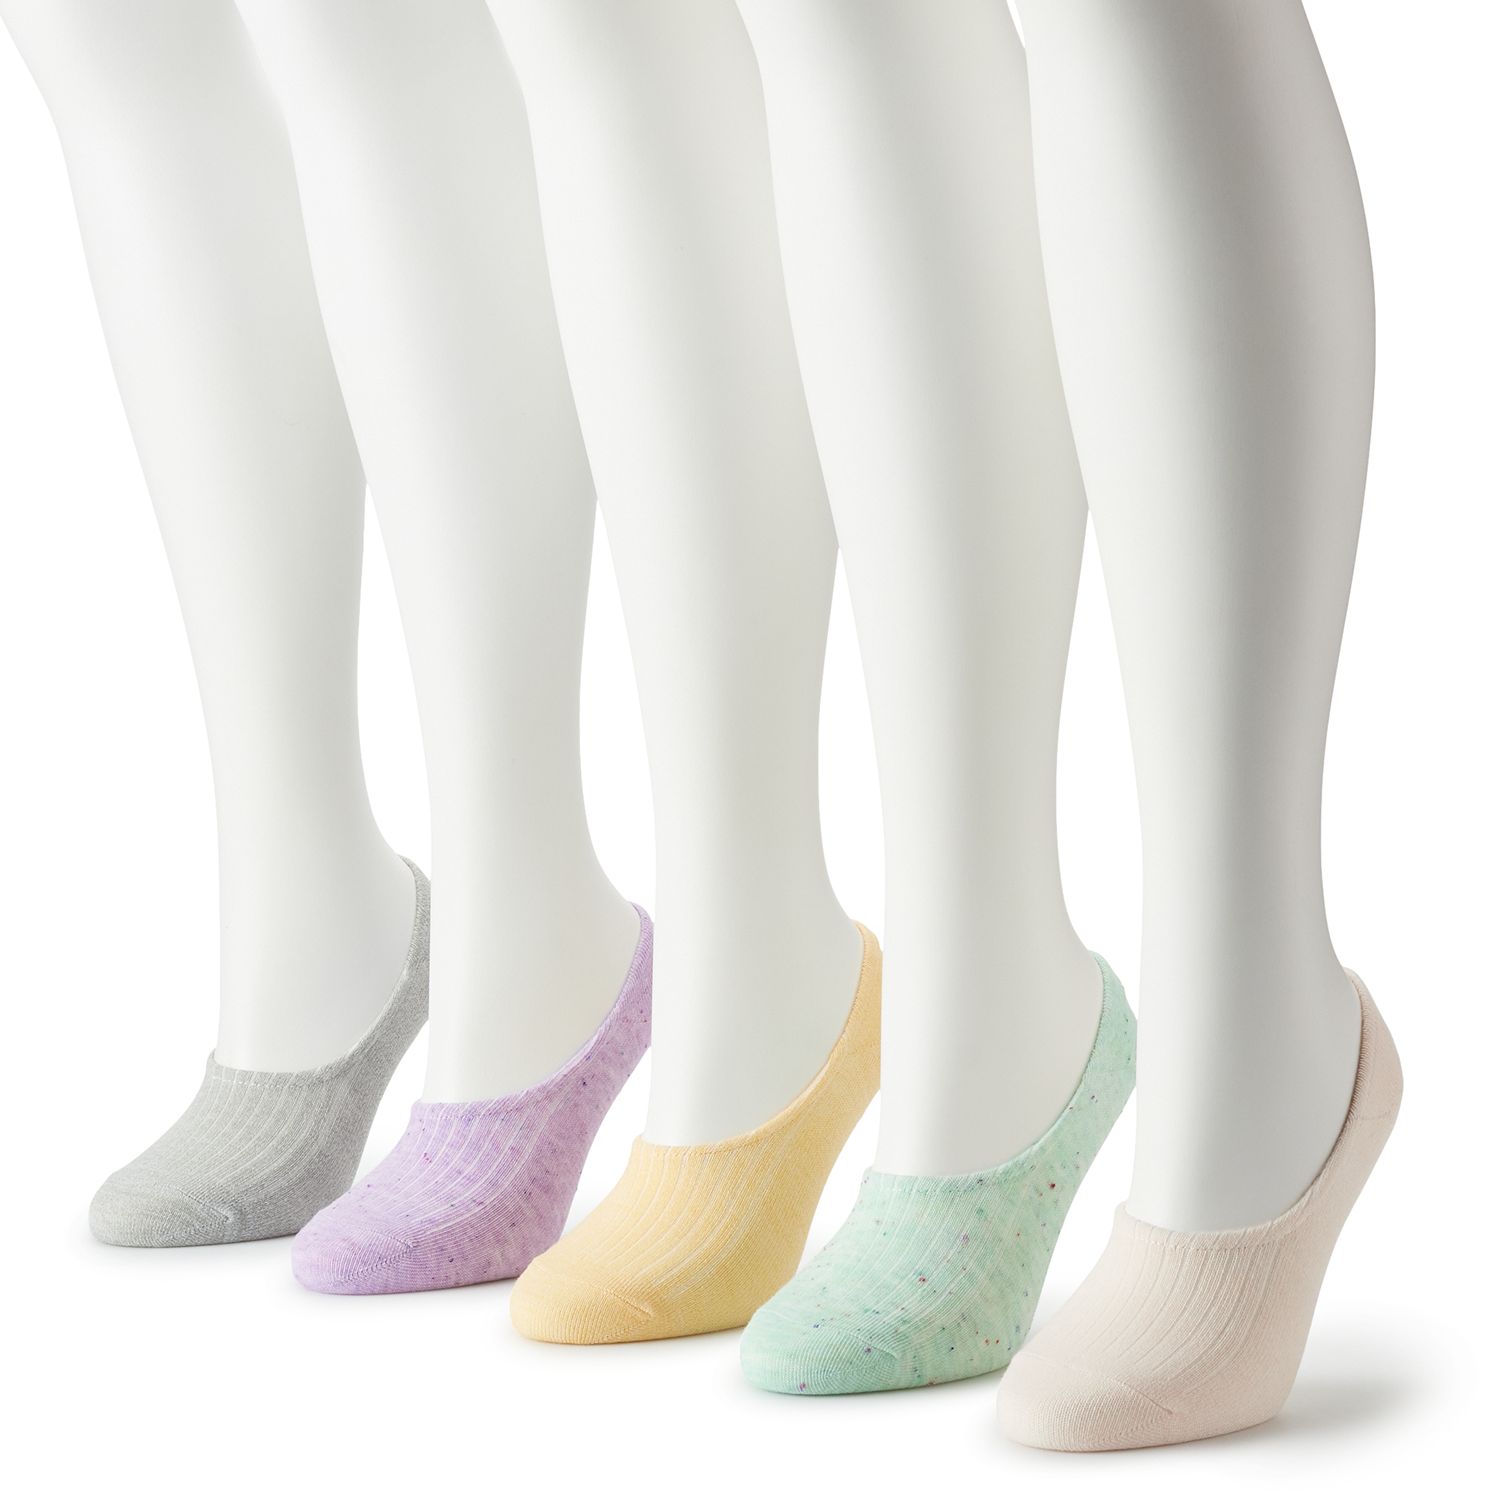 For Bare Feet Adult St. Louis Blues Rainbow Cozy Socks